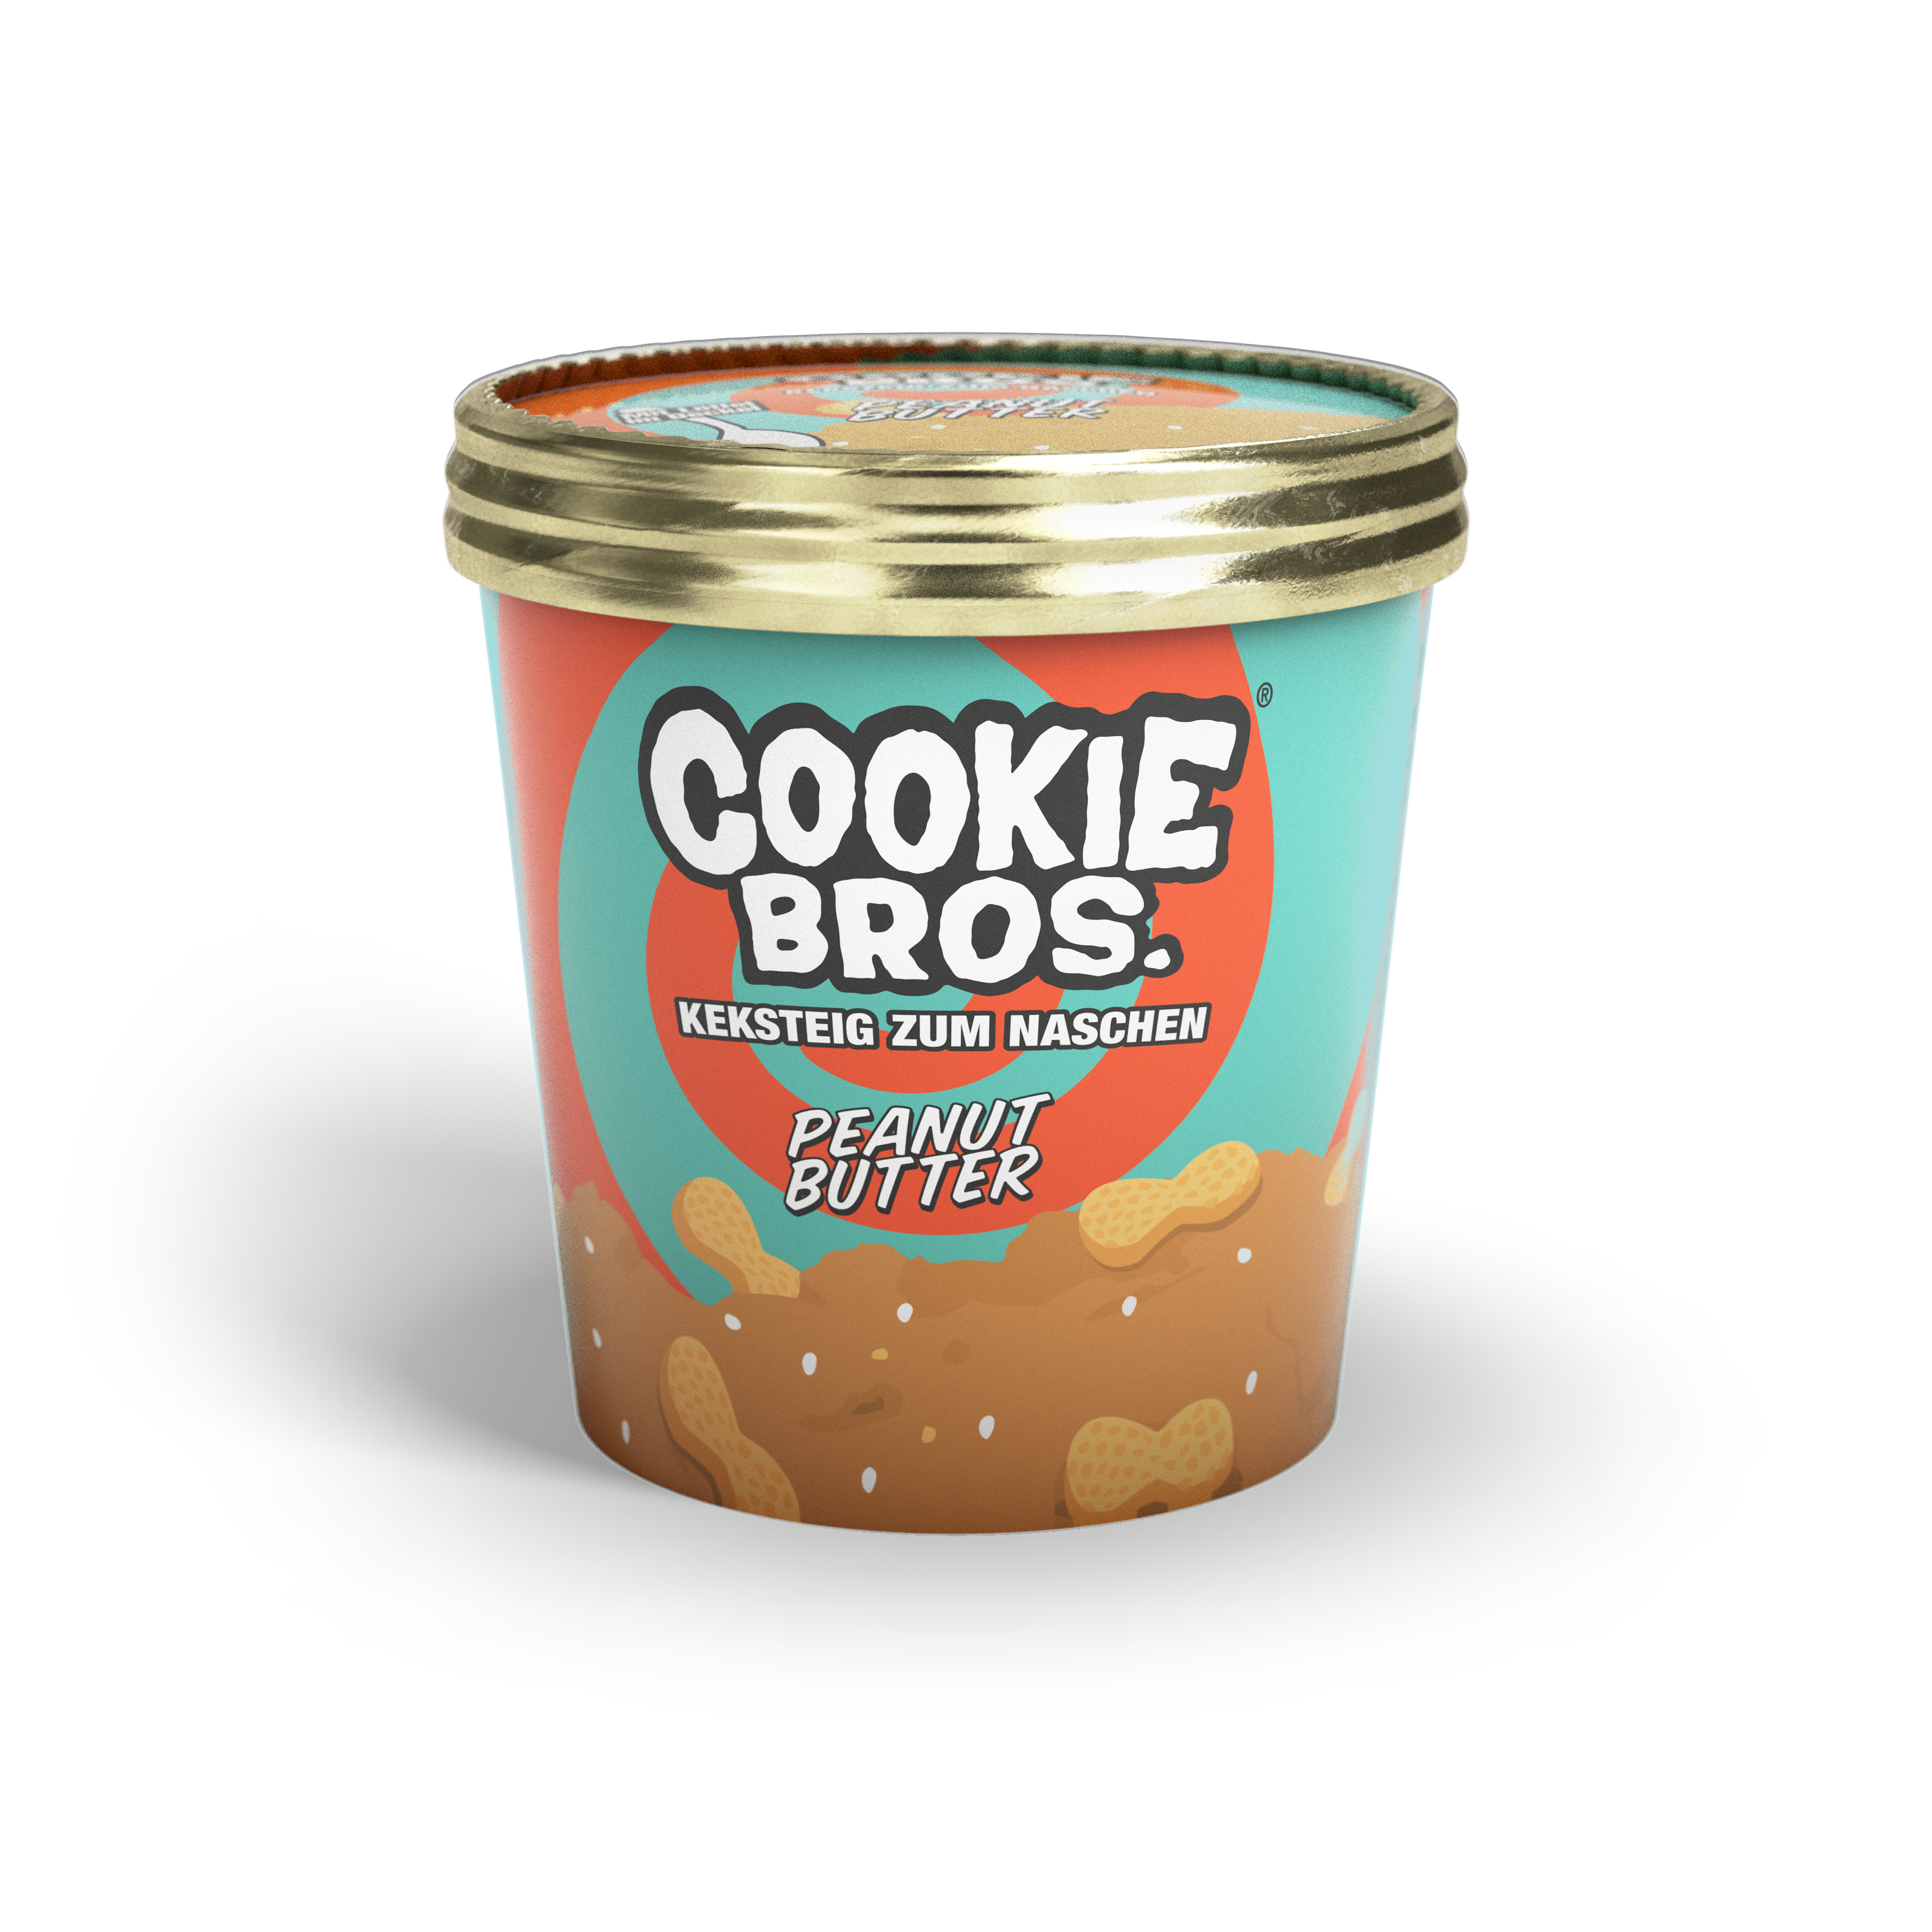 Cookie Bros. Peanut Butter